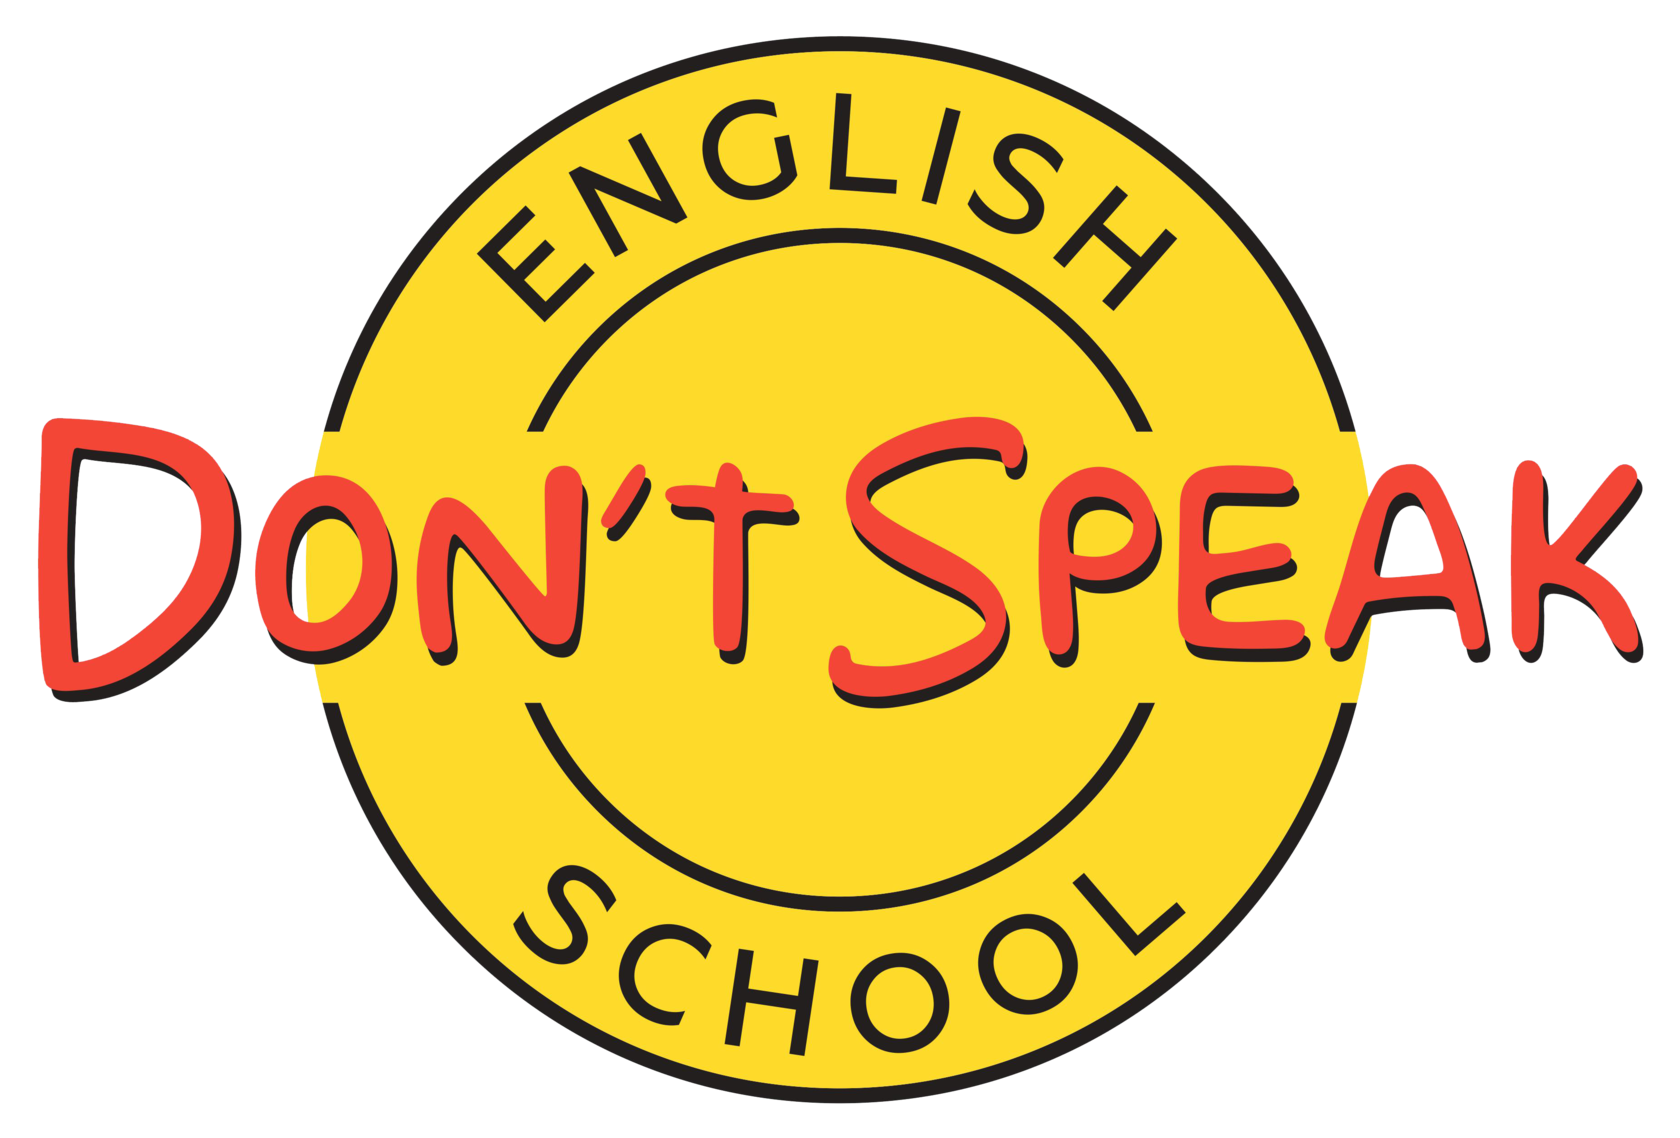 Школа донт спик. Don't speak школа английского языка. I don't speak English школа. Don’t speak подкаст. I don t can speak english